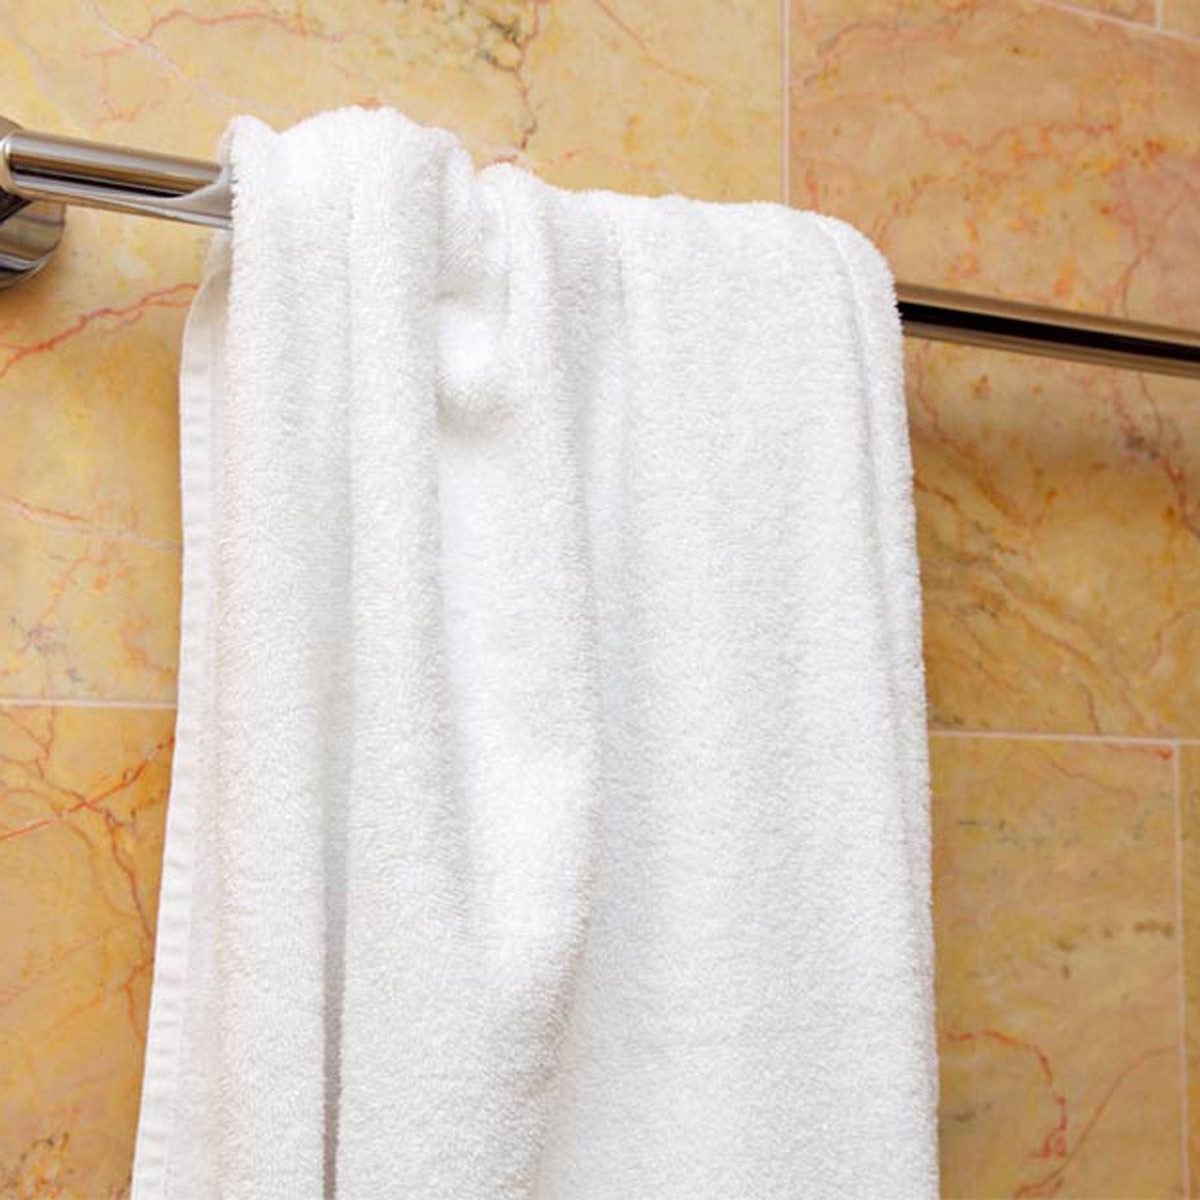 https://www.familyhandyman.com/wp-content/uploads/2020/07/how-often-to-wash-bath-towels-ft-1.jpg